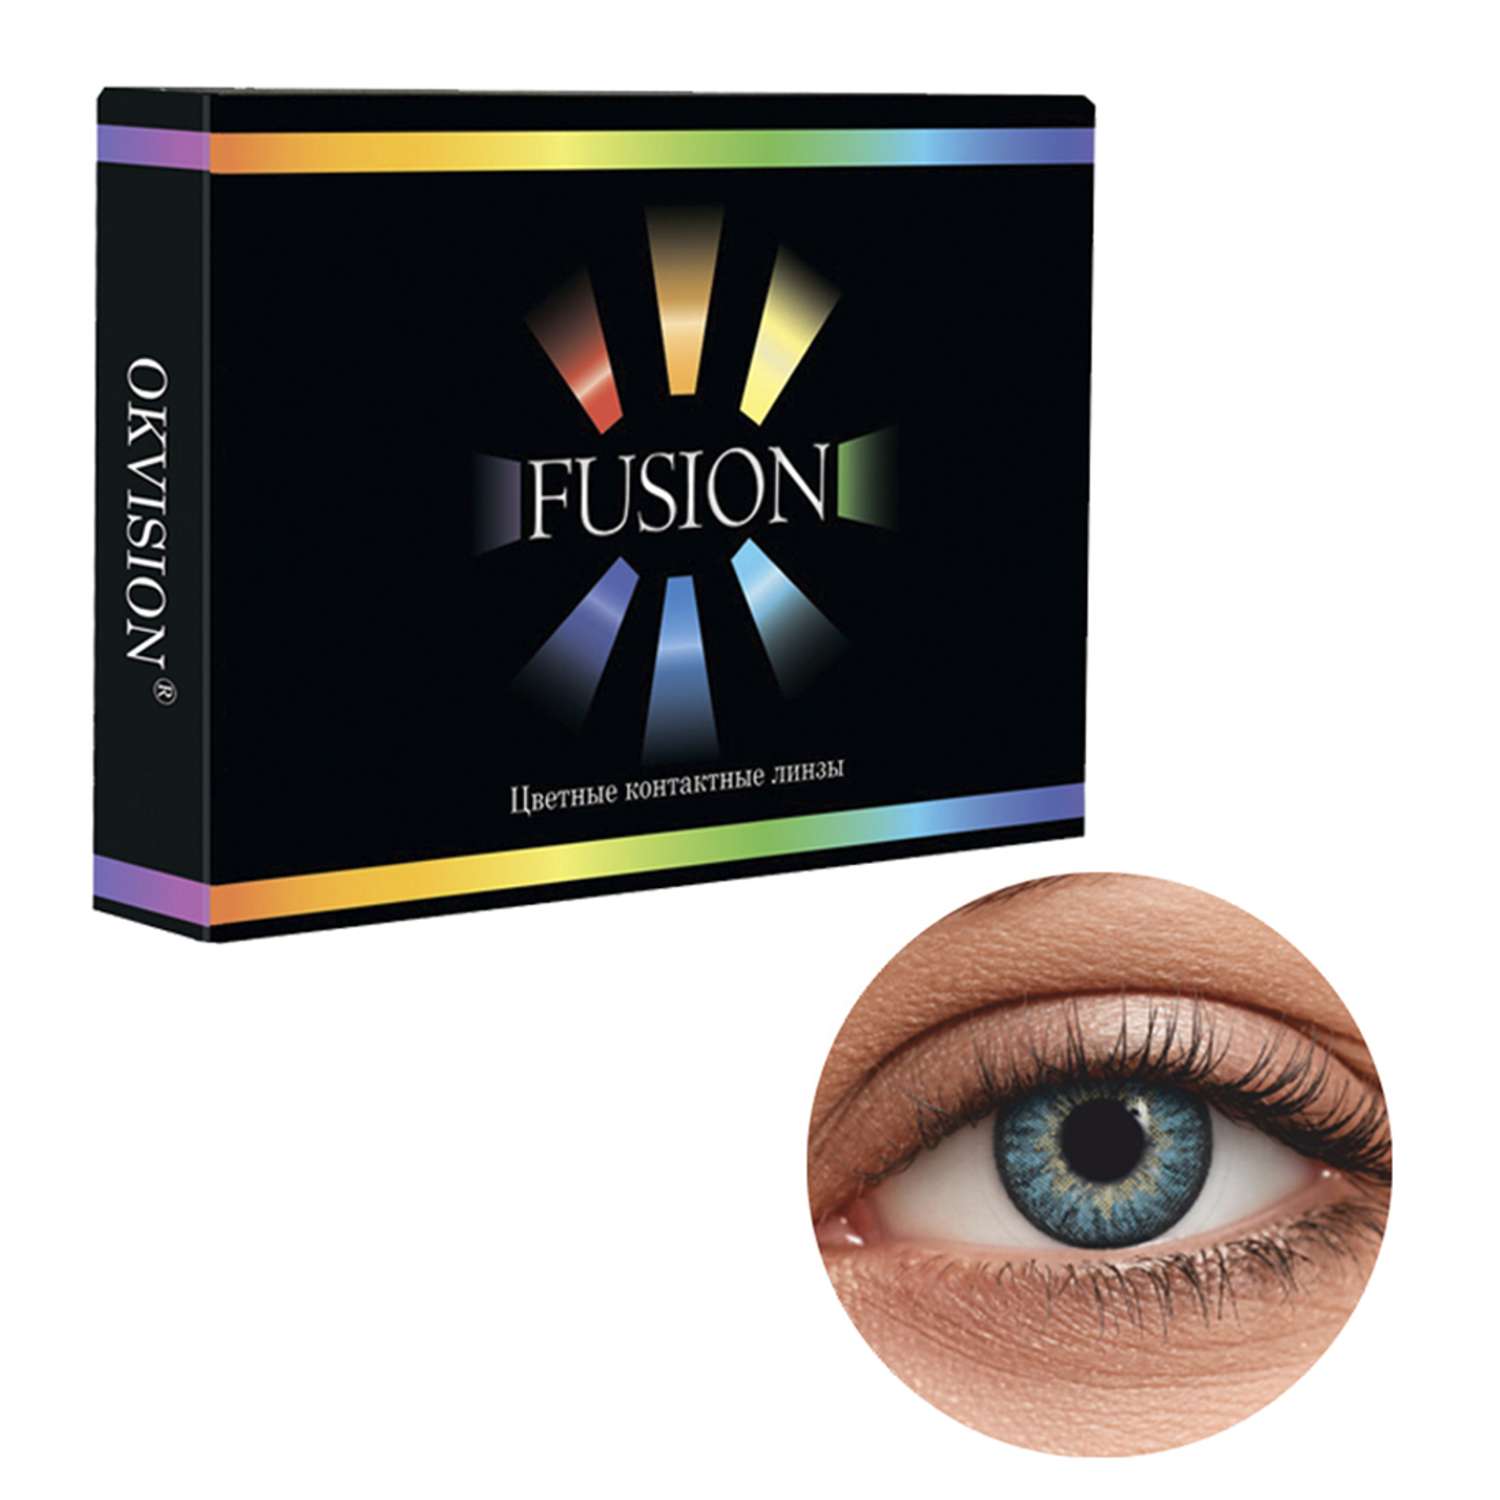 Цветные контактные линзы OKVision Fusion monthly R 8.6 -3.50 цвет Sky Blue 2 шт 1 месяц - фото 1